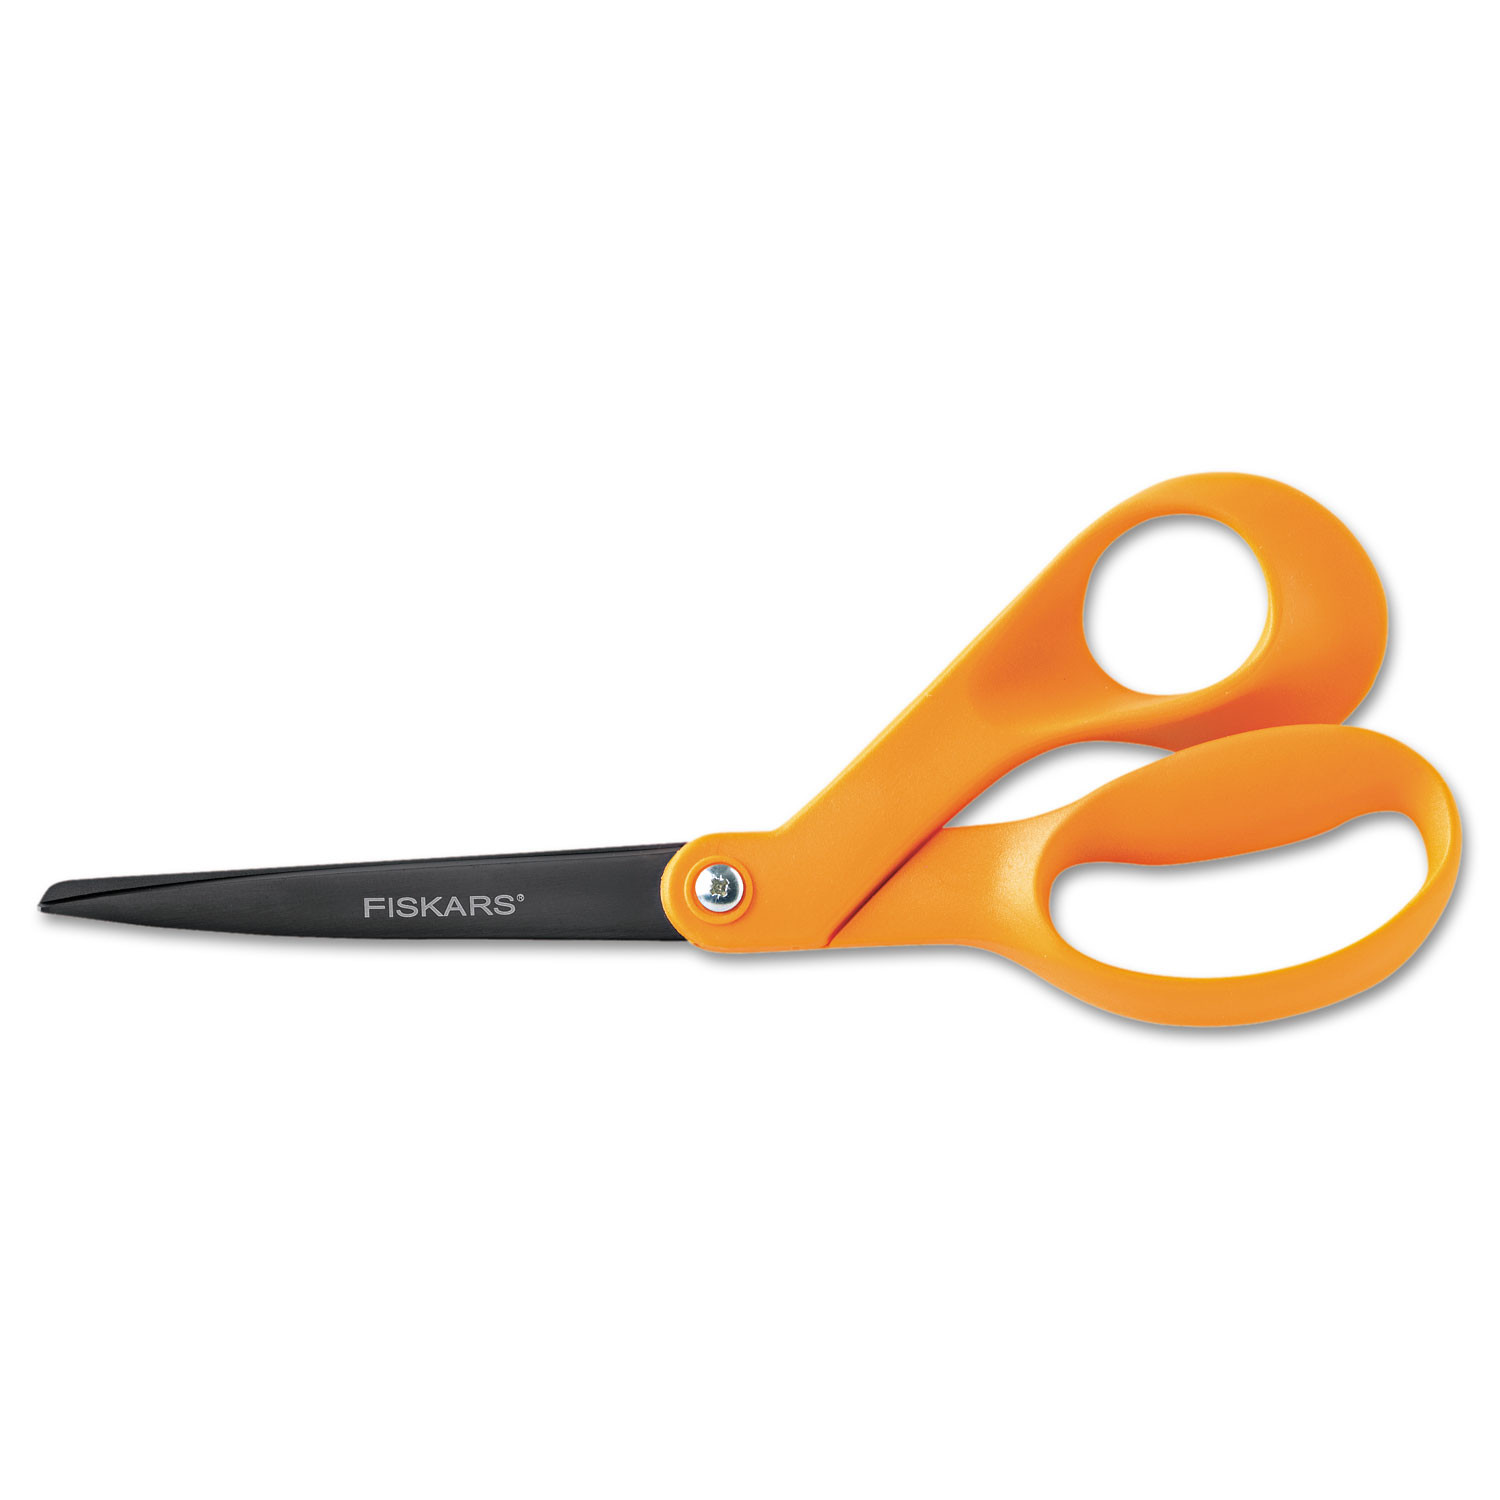 Universal Industrial Scissors, 8 Length, Straight, Black Carbon